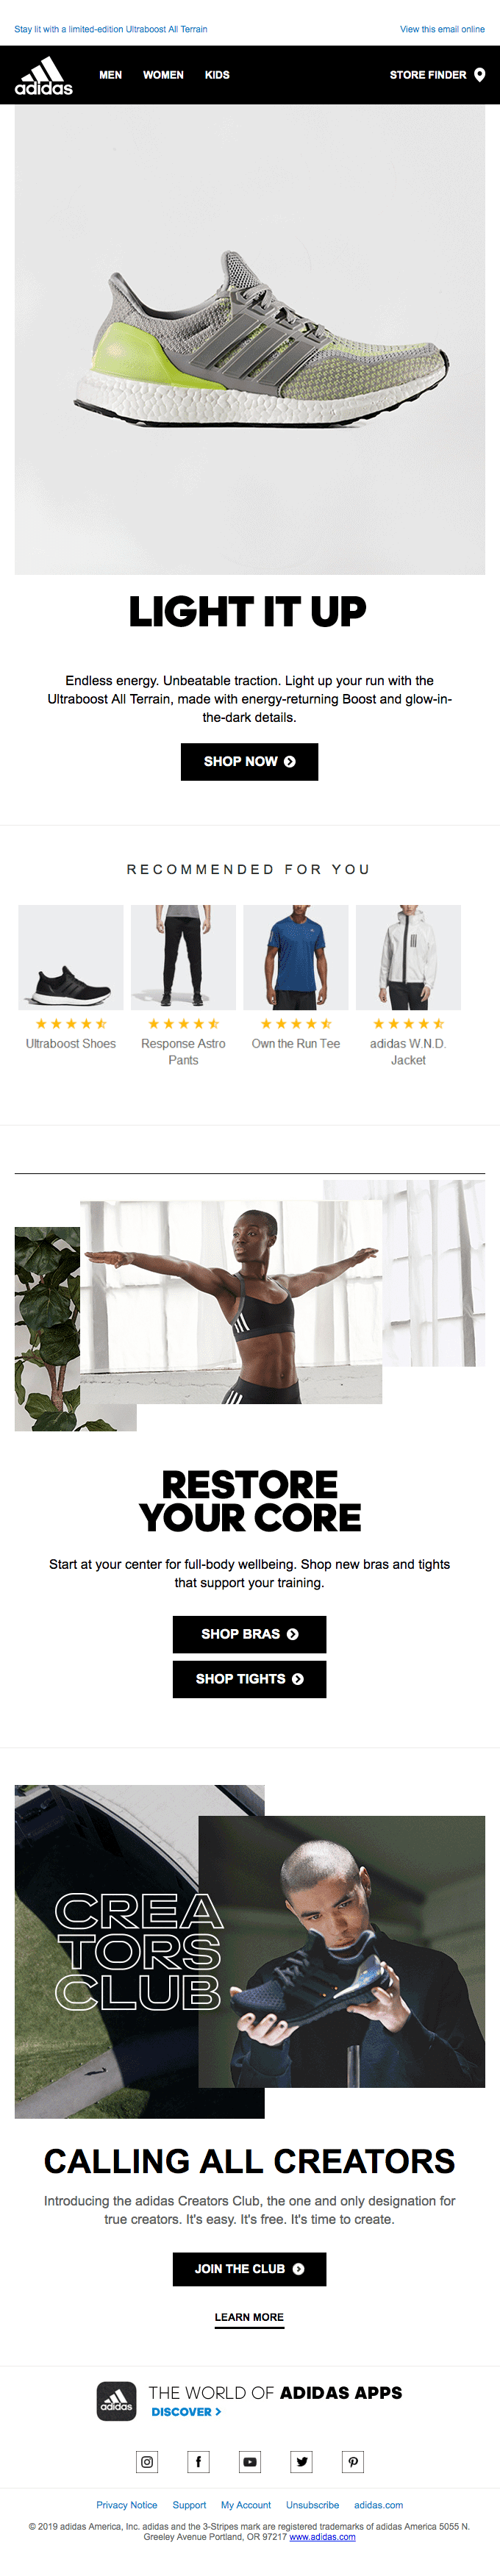 Ultraboost All Terrain, illuminate your run - Adidas Email Newsletter